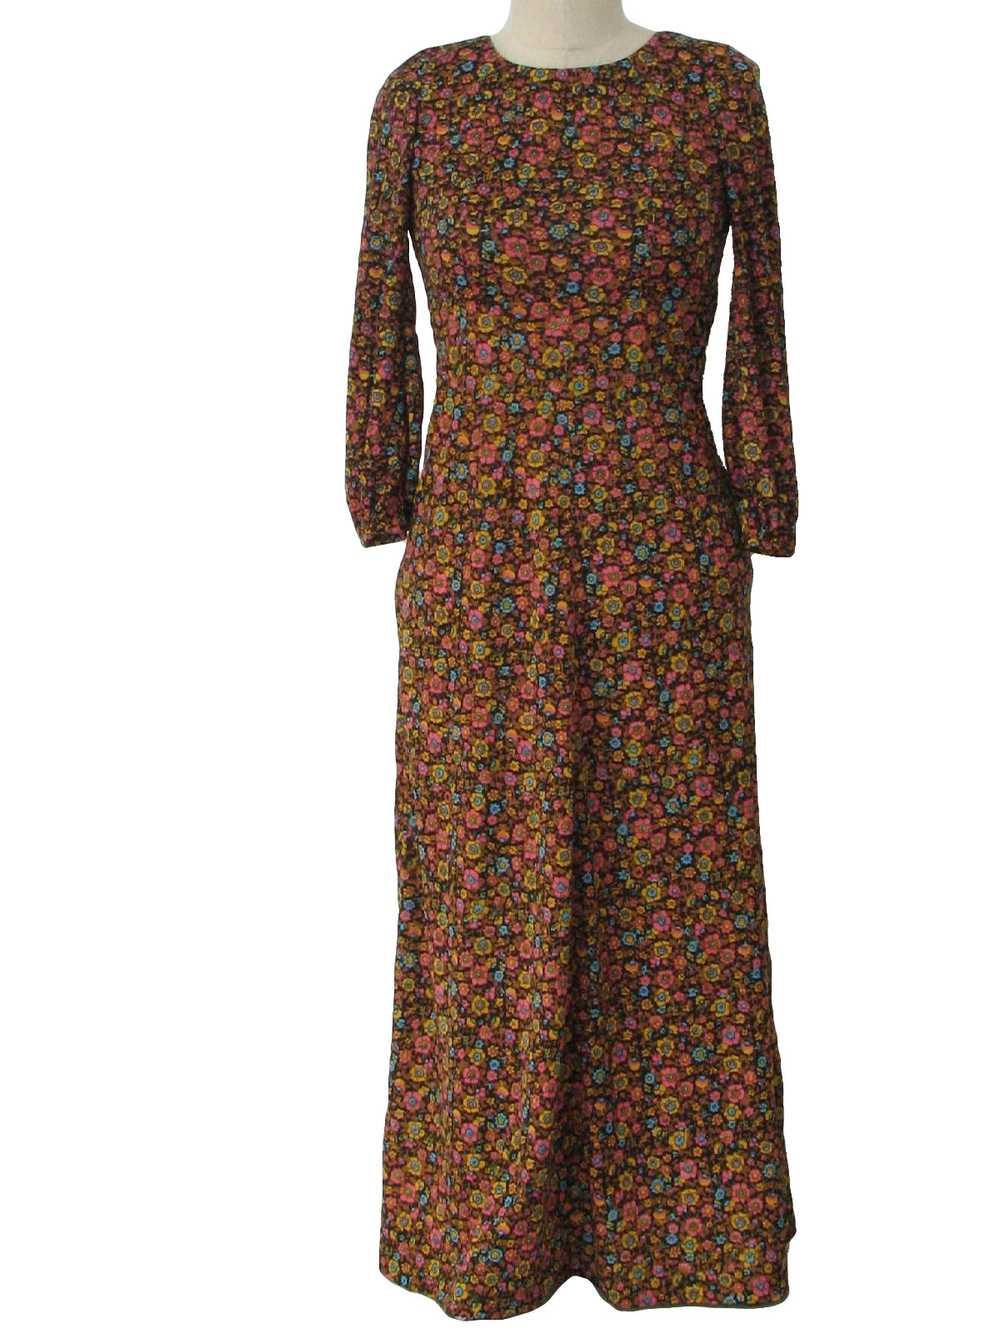 1970's Hippie Maxi Dress - image 1